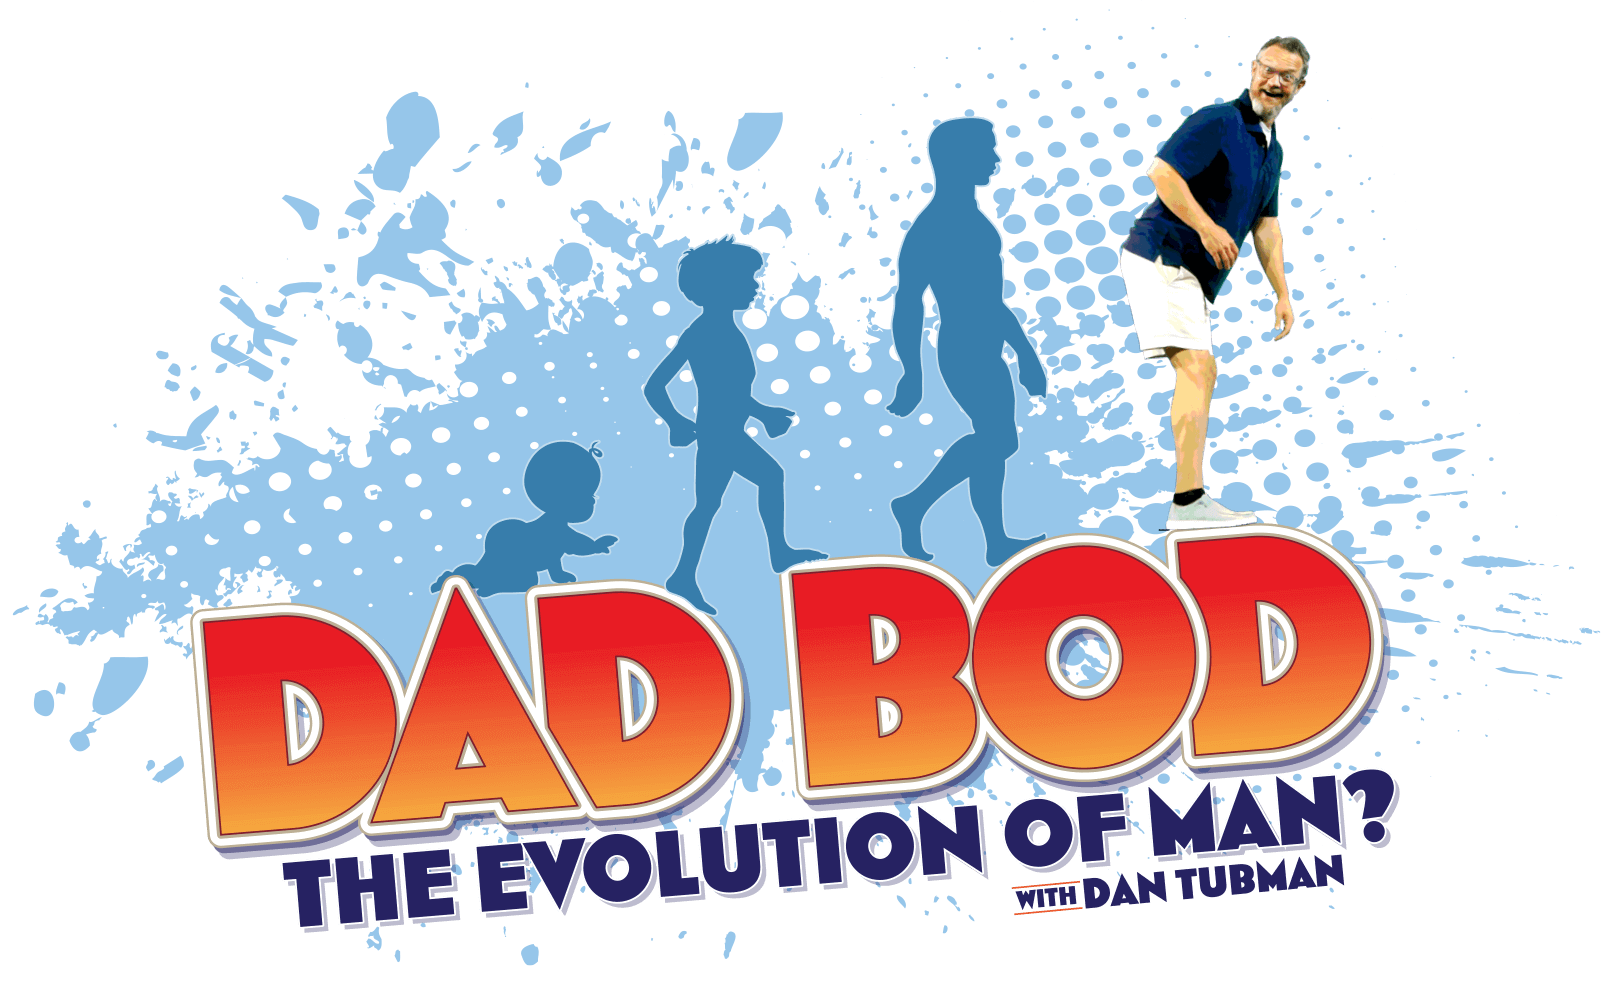 DadBod: The Evolution of Man?